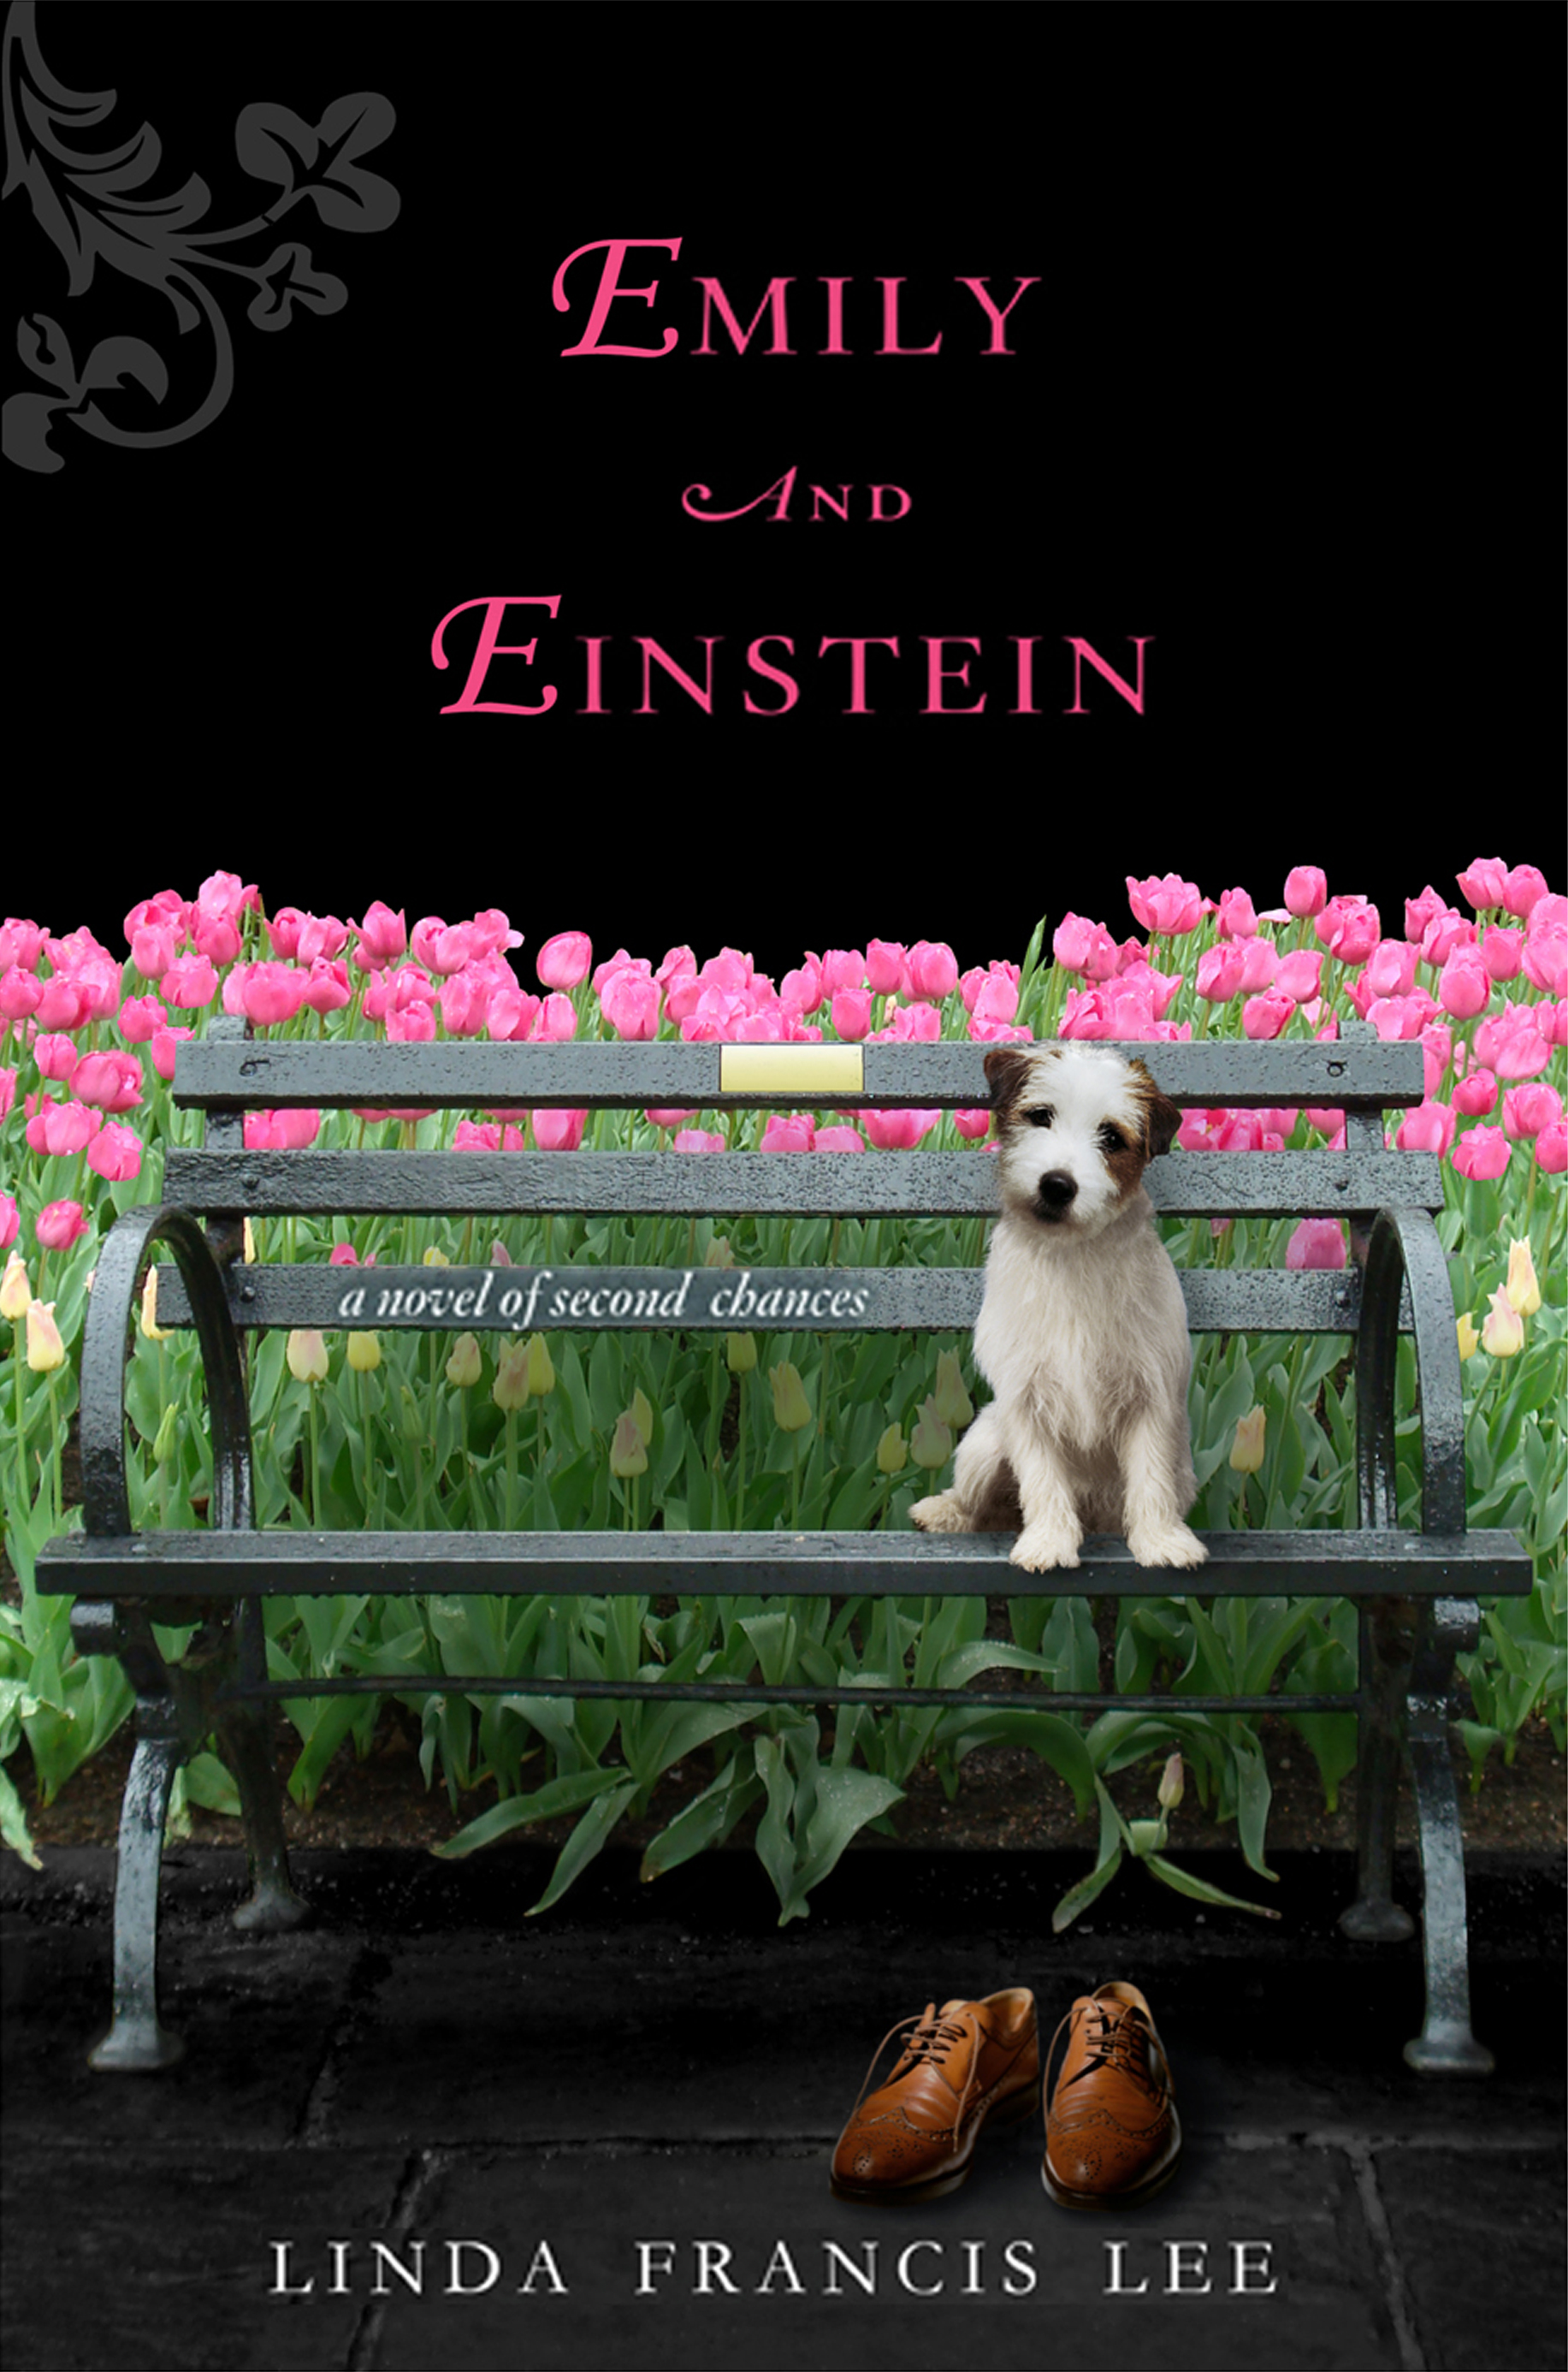 Image for "Emily & Einstein"